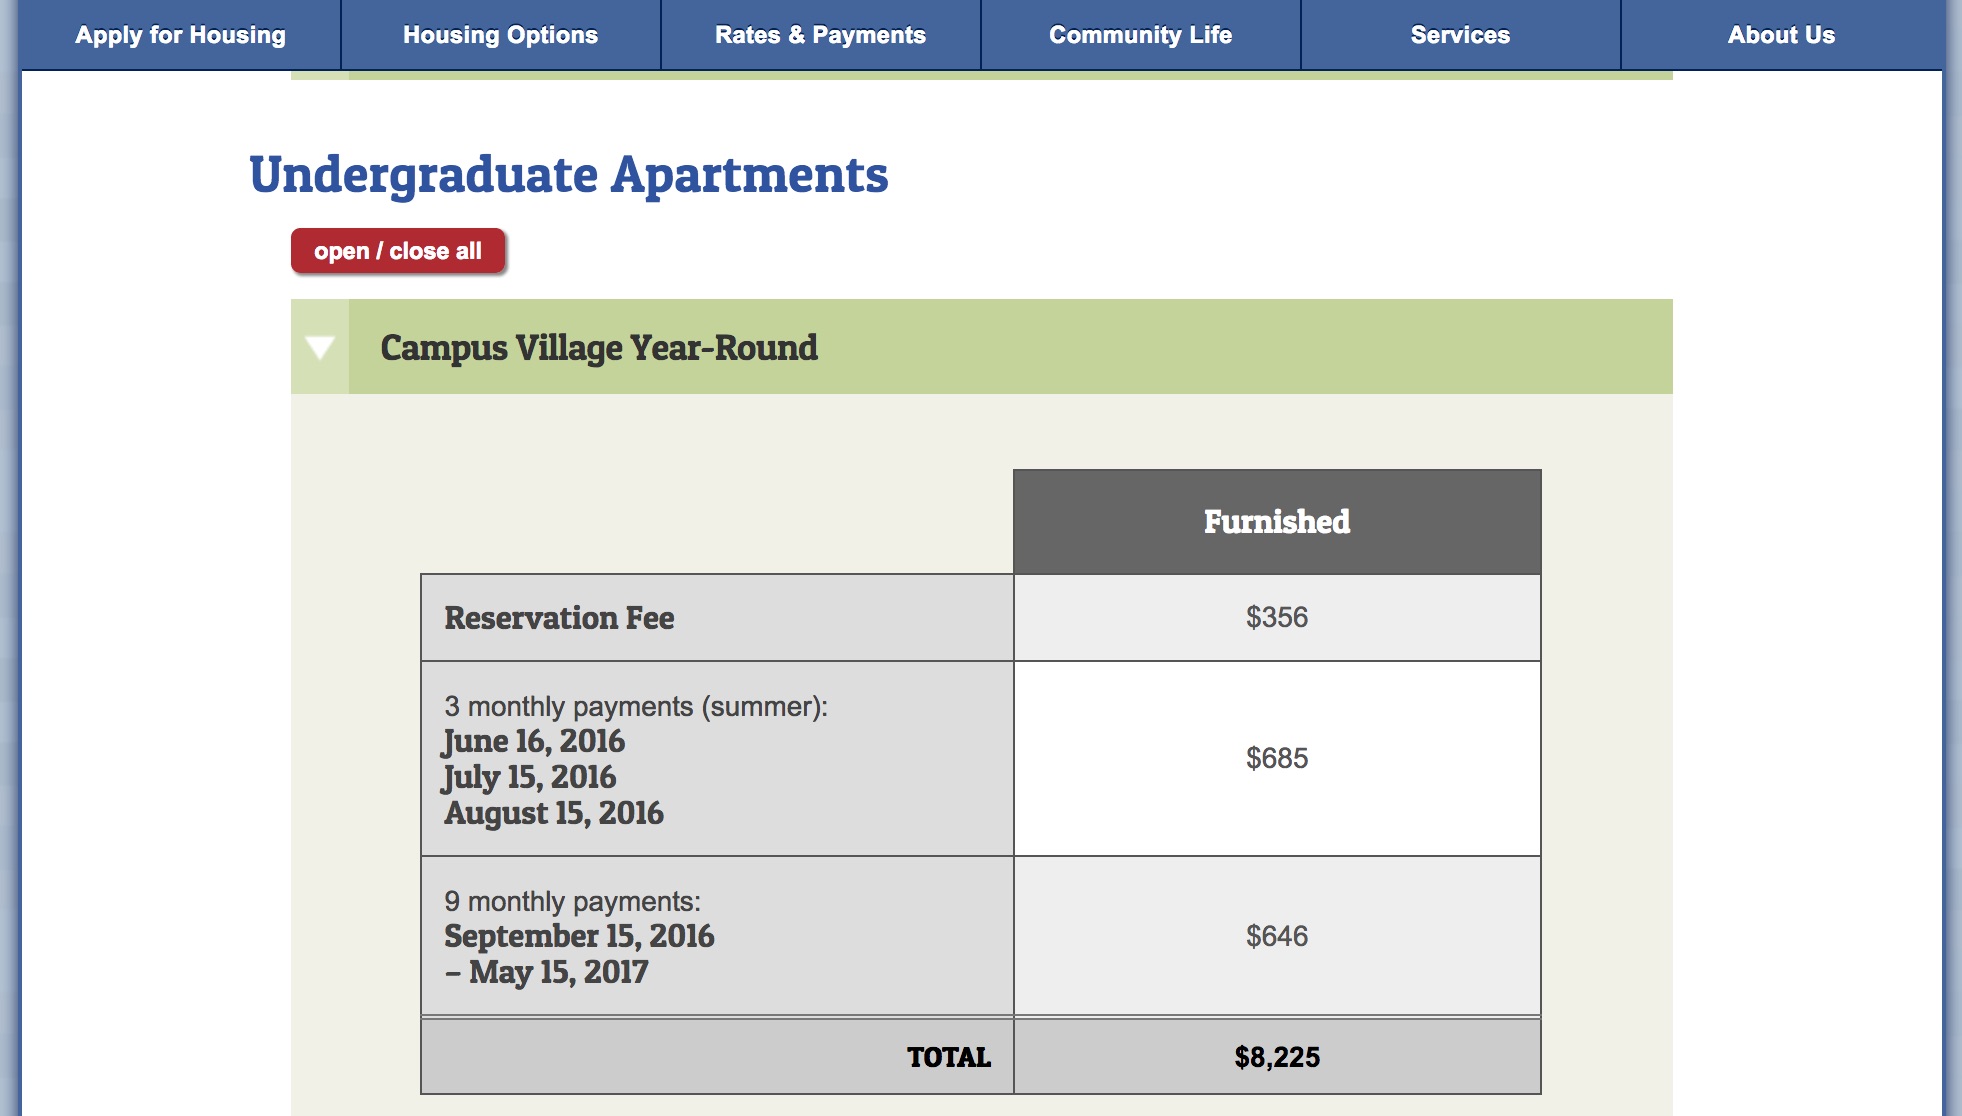 https://www.davisvanguard.org/wp-content/uploads/2017/05/UC-Irvine-On-Campus-Apartment-Rates.jpg